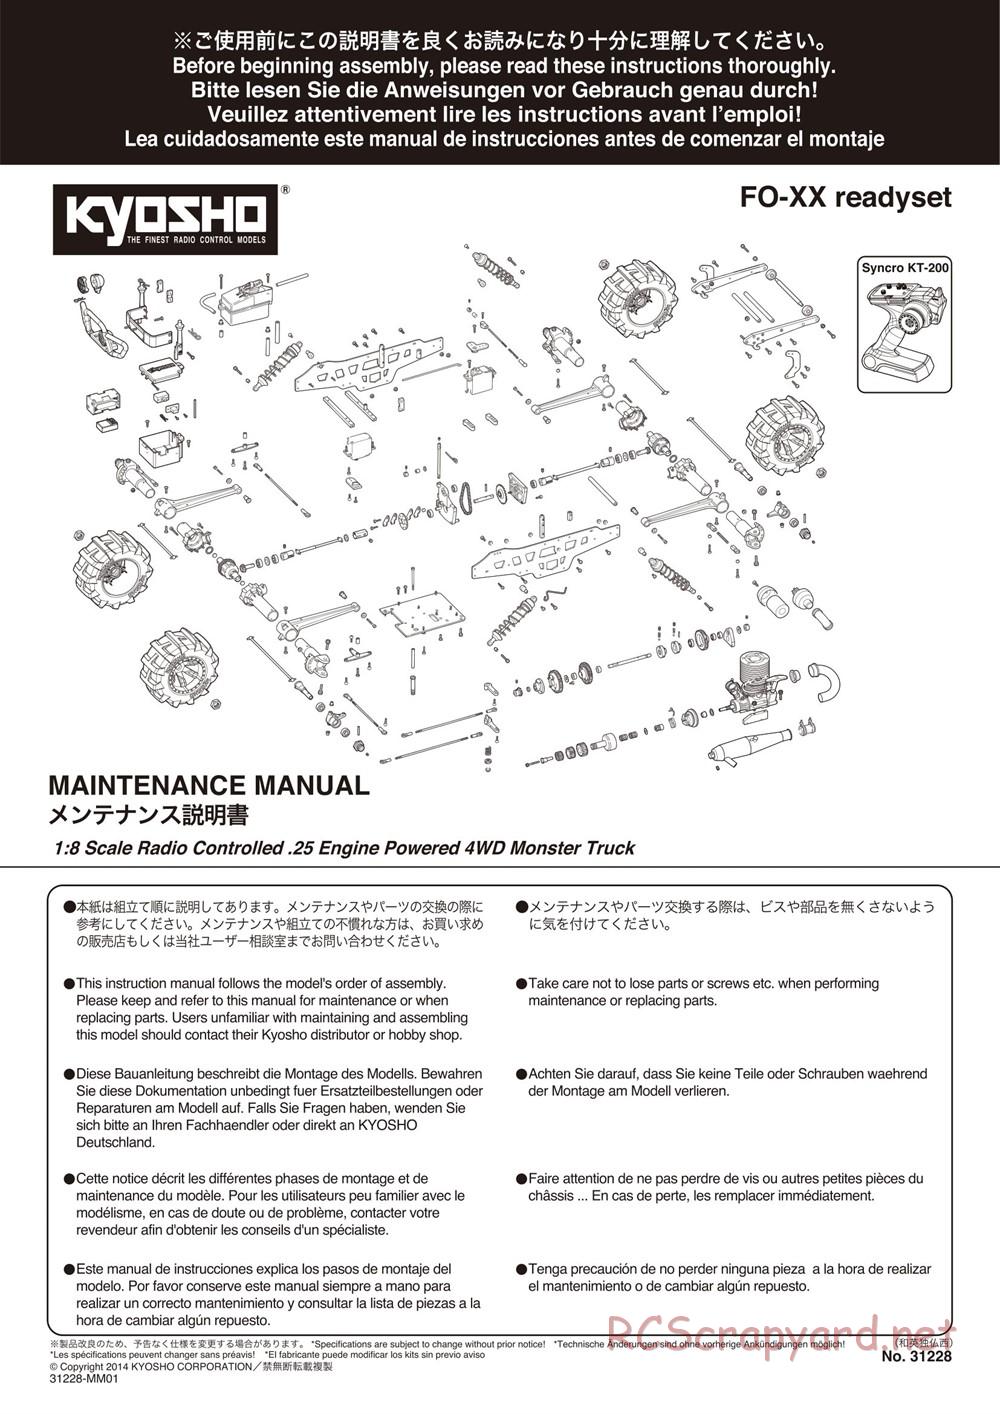 Kyosho - FO-XX GP - Manual - Page 1